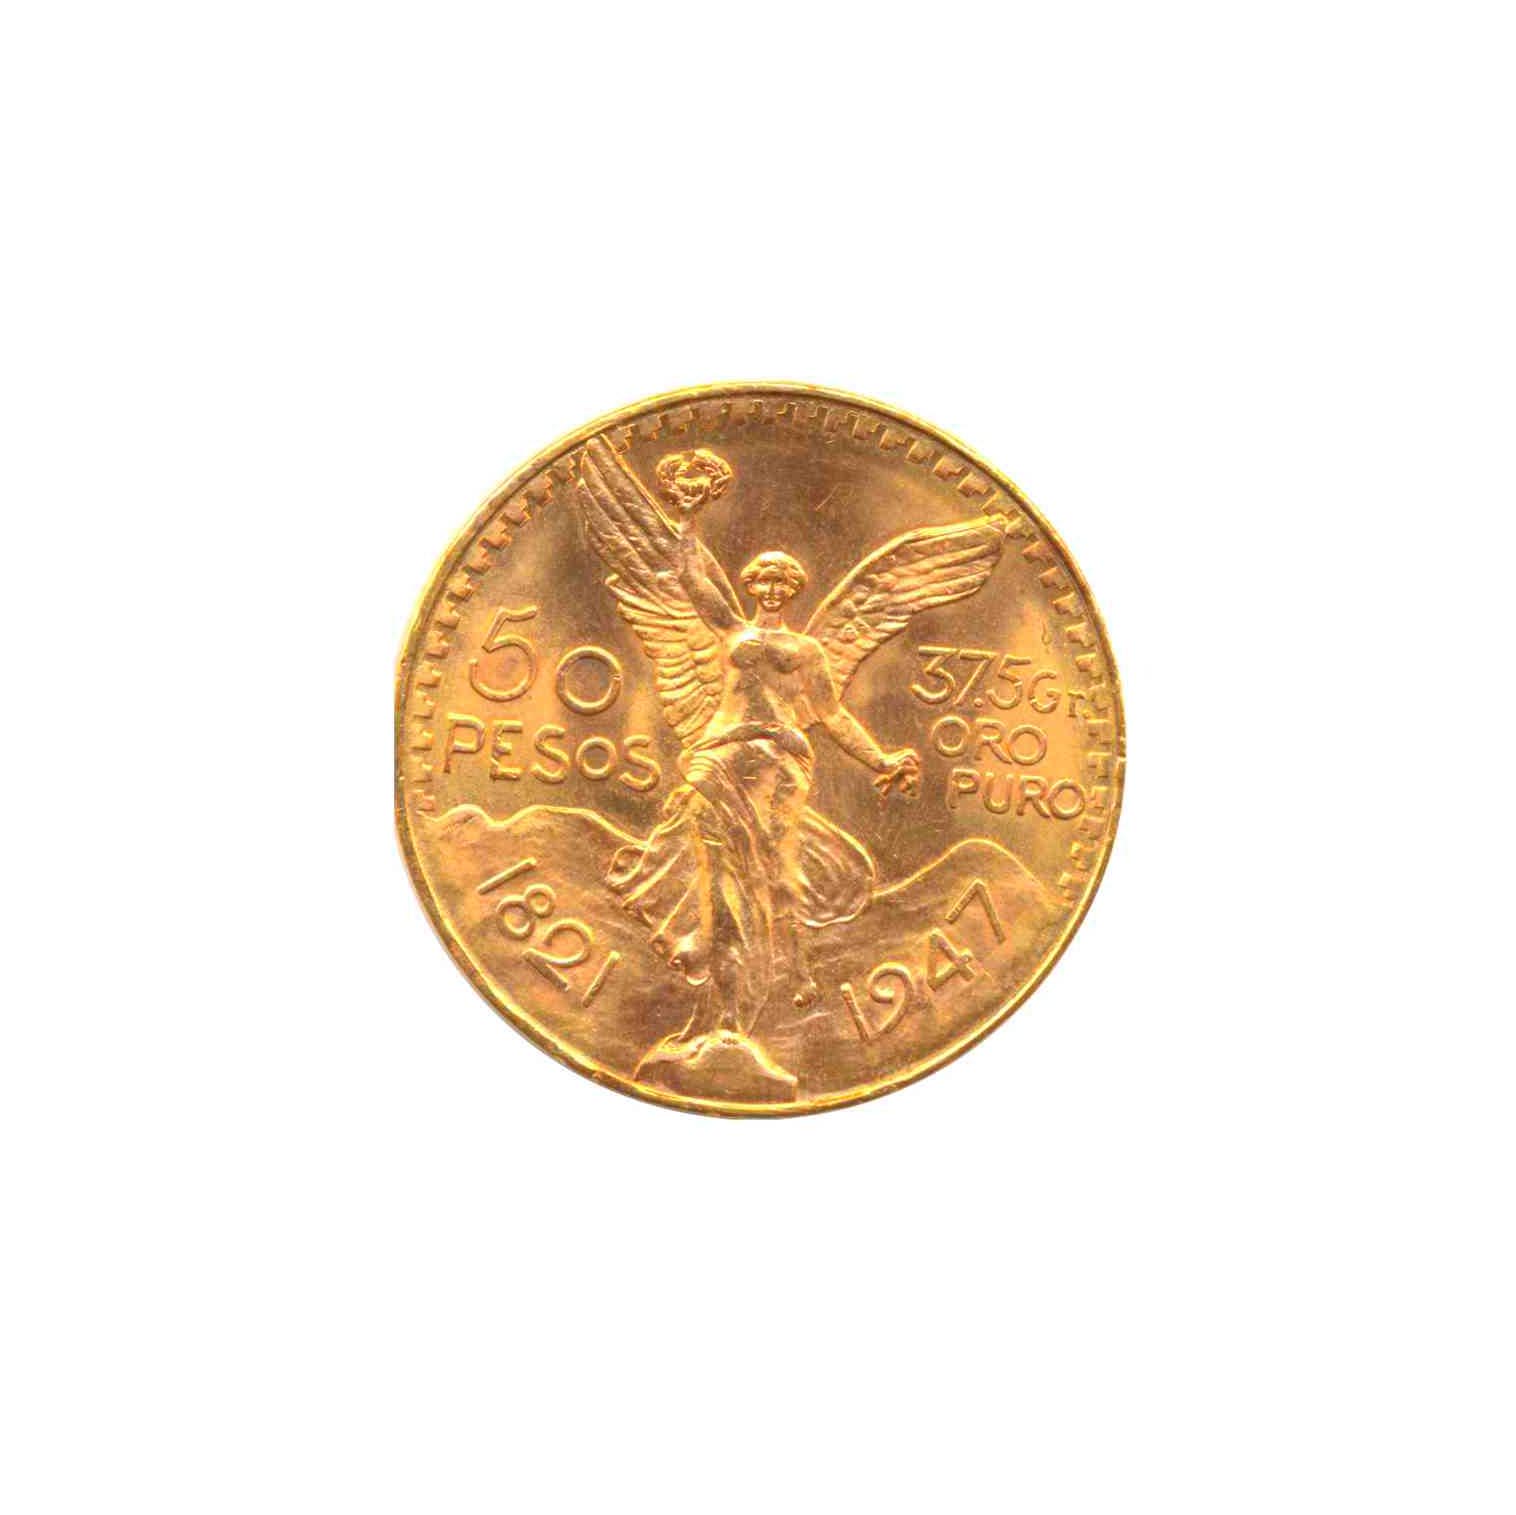 Mexican gold coin.